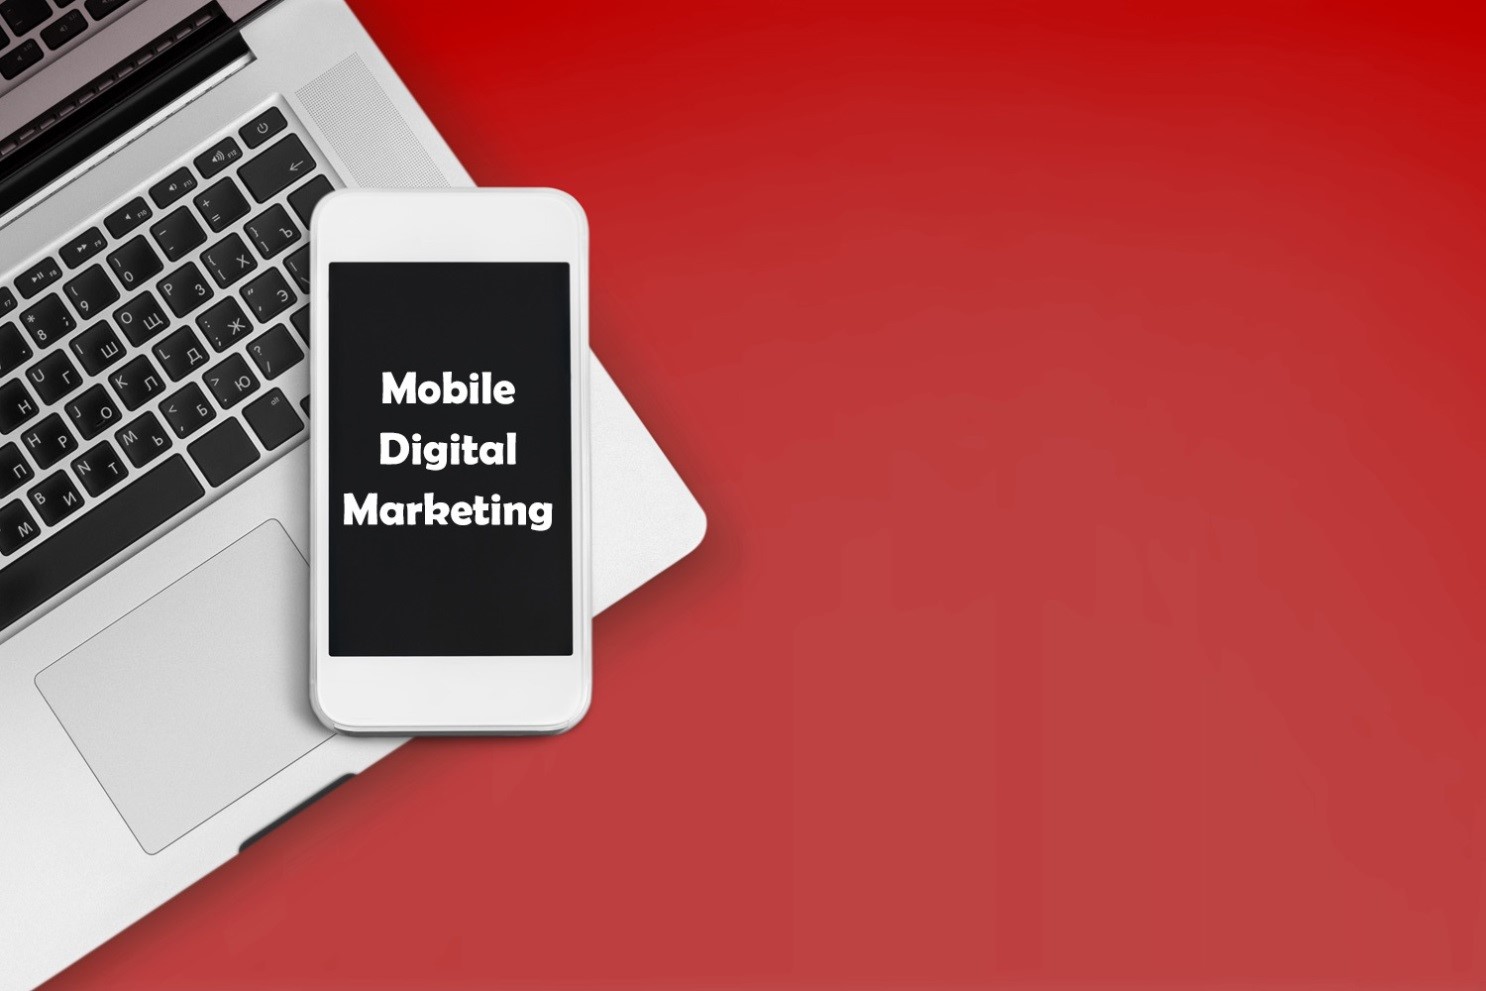 Mobile digital marketing